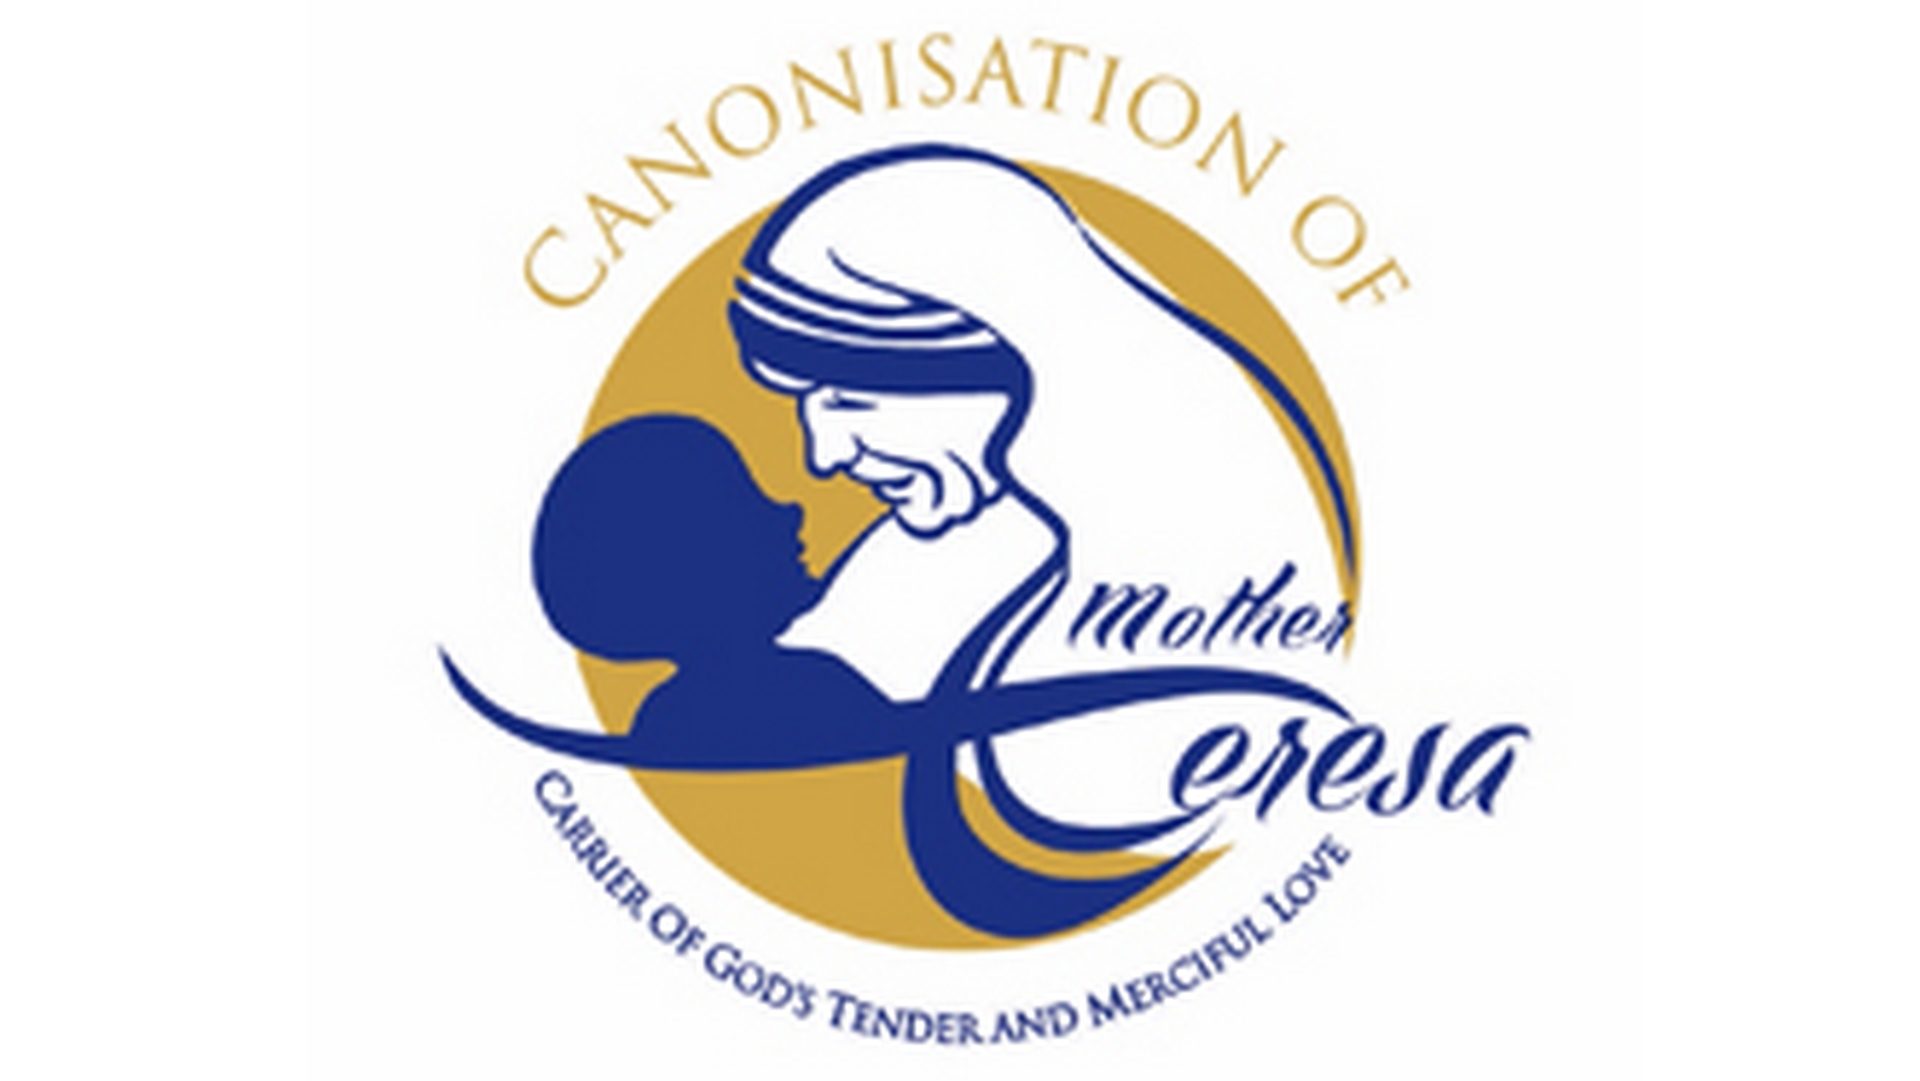 Logo de la canonisation de Mère Teresa